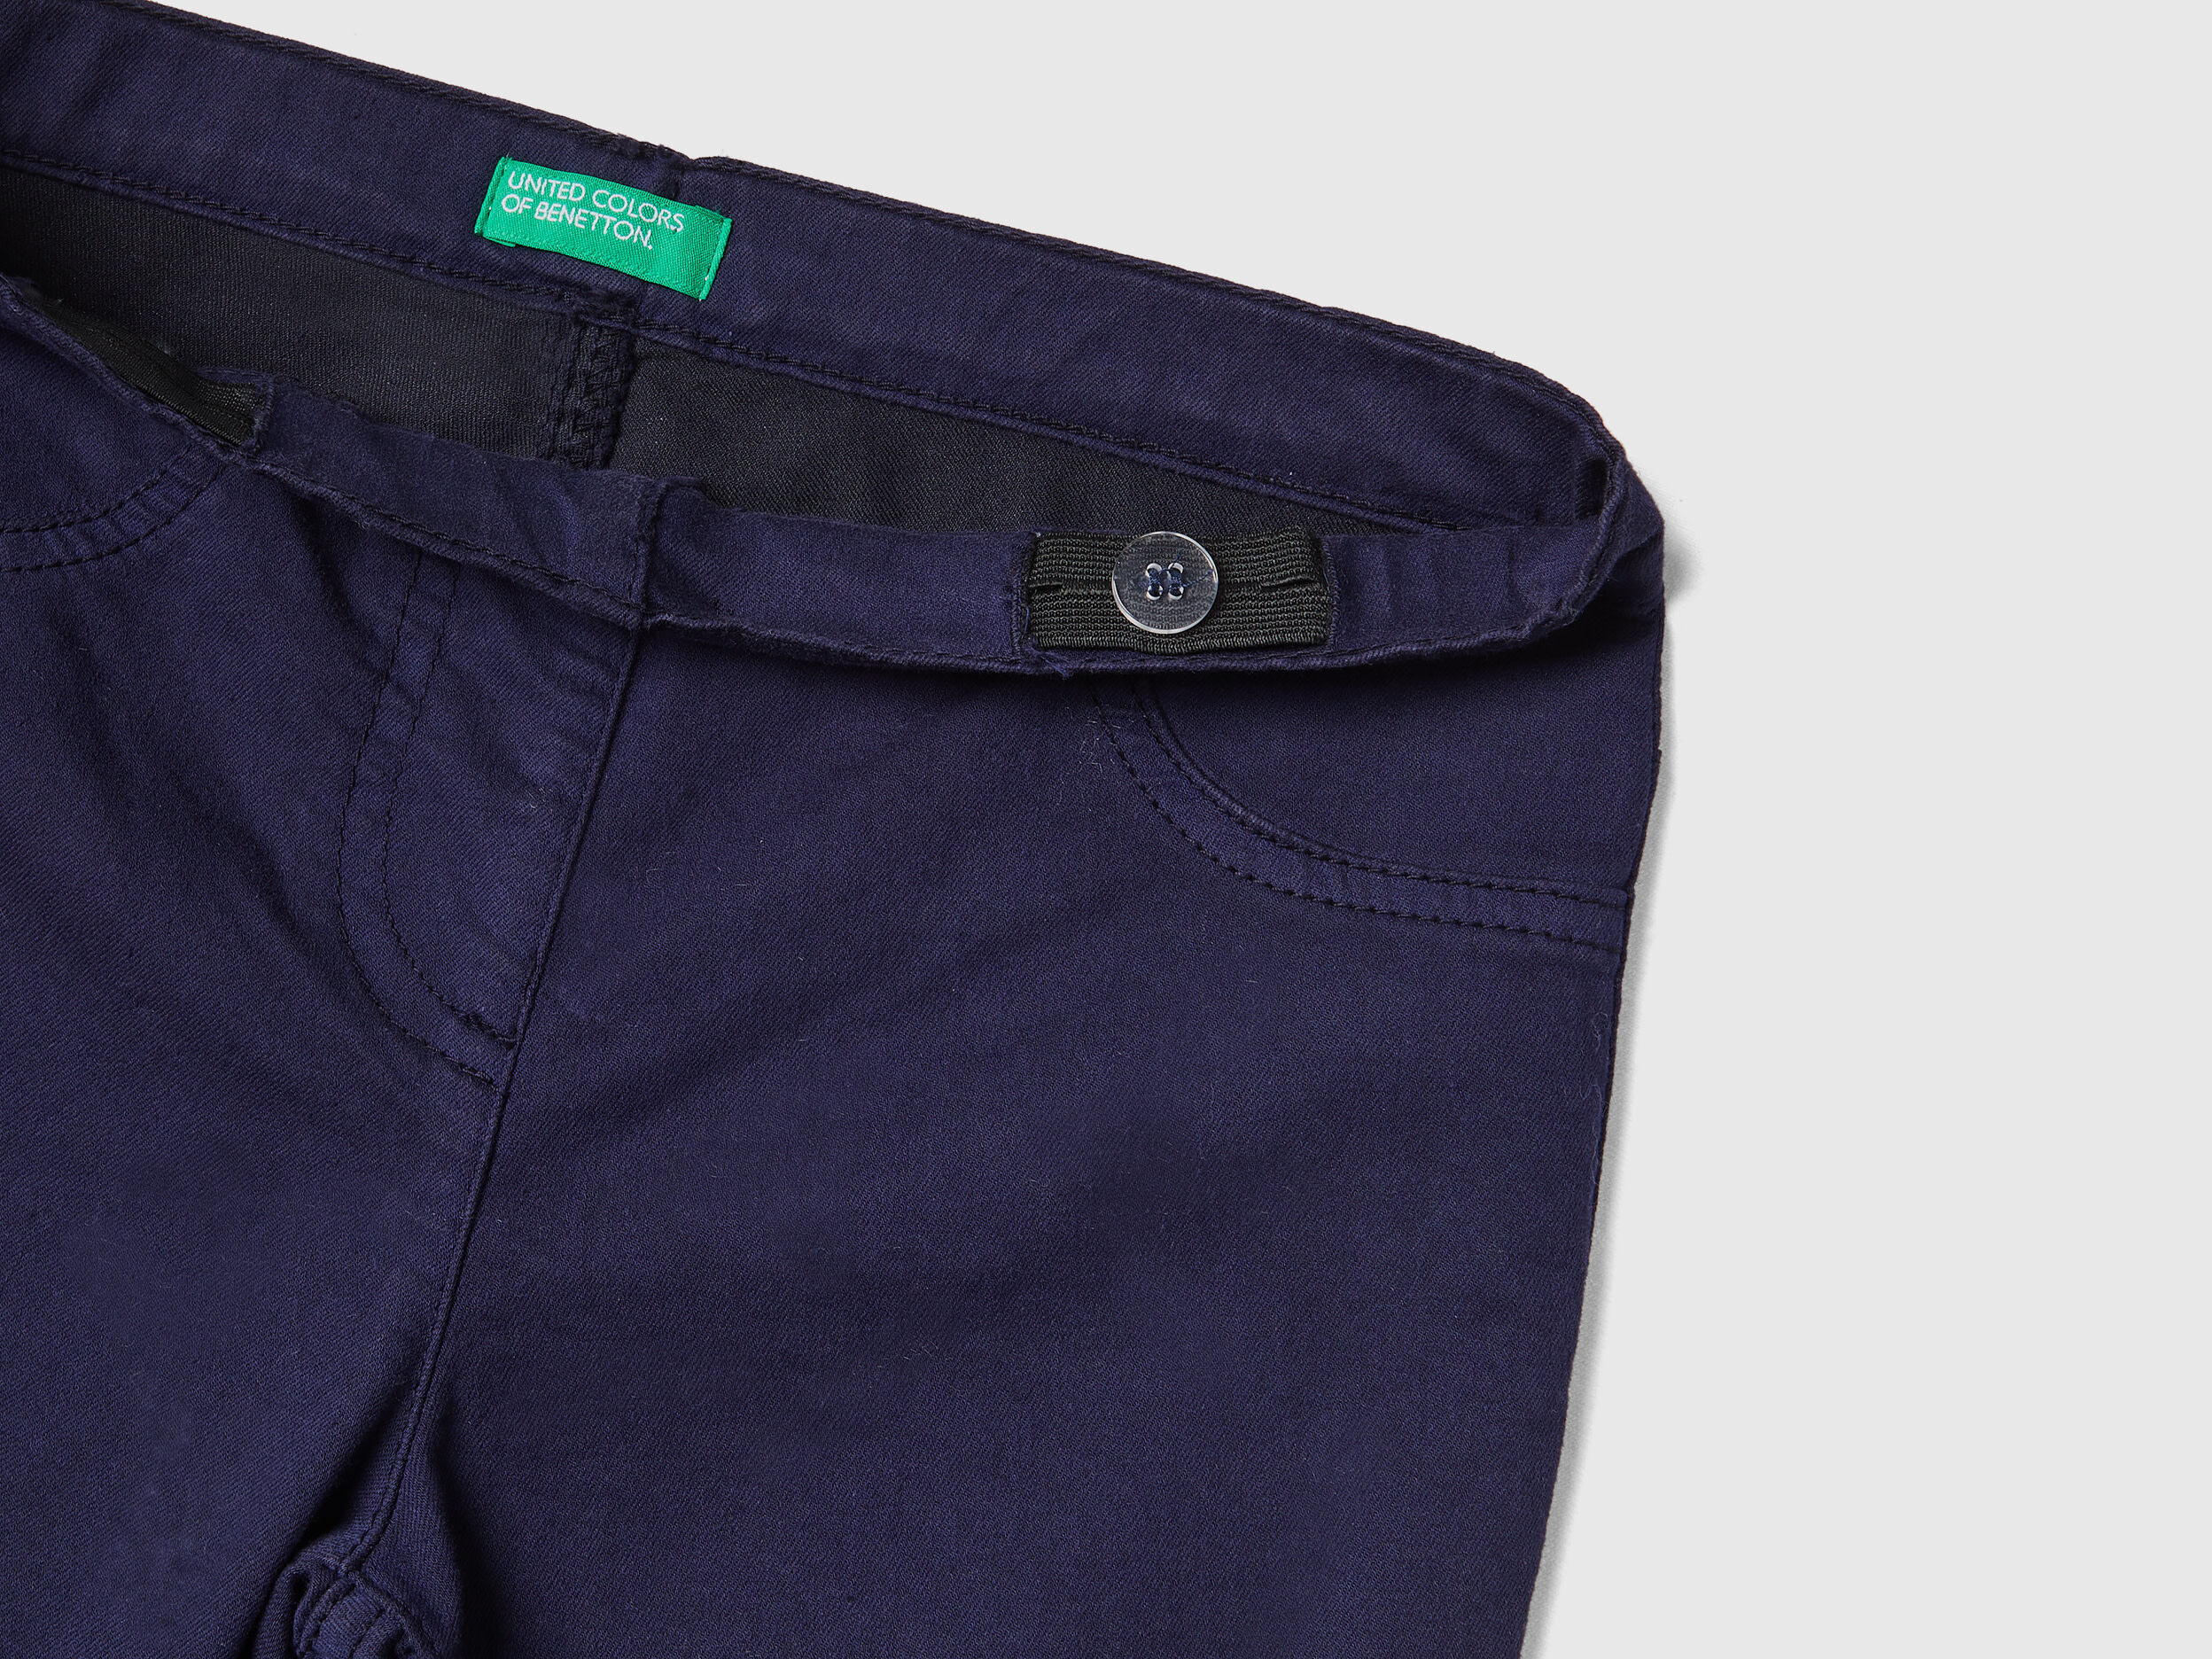 Super Skinny Crop Check Tailored Trouser | boohooMAN UK